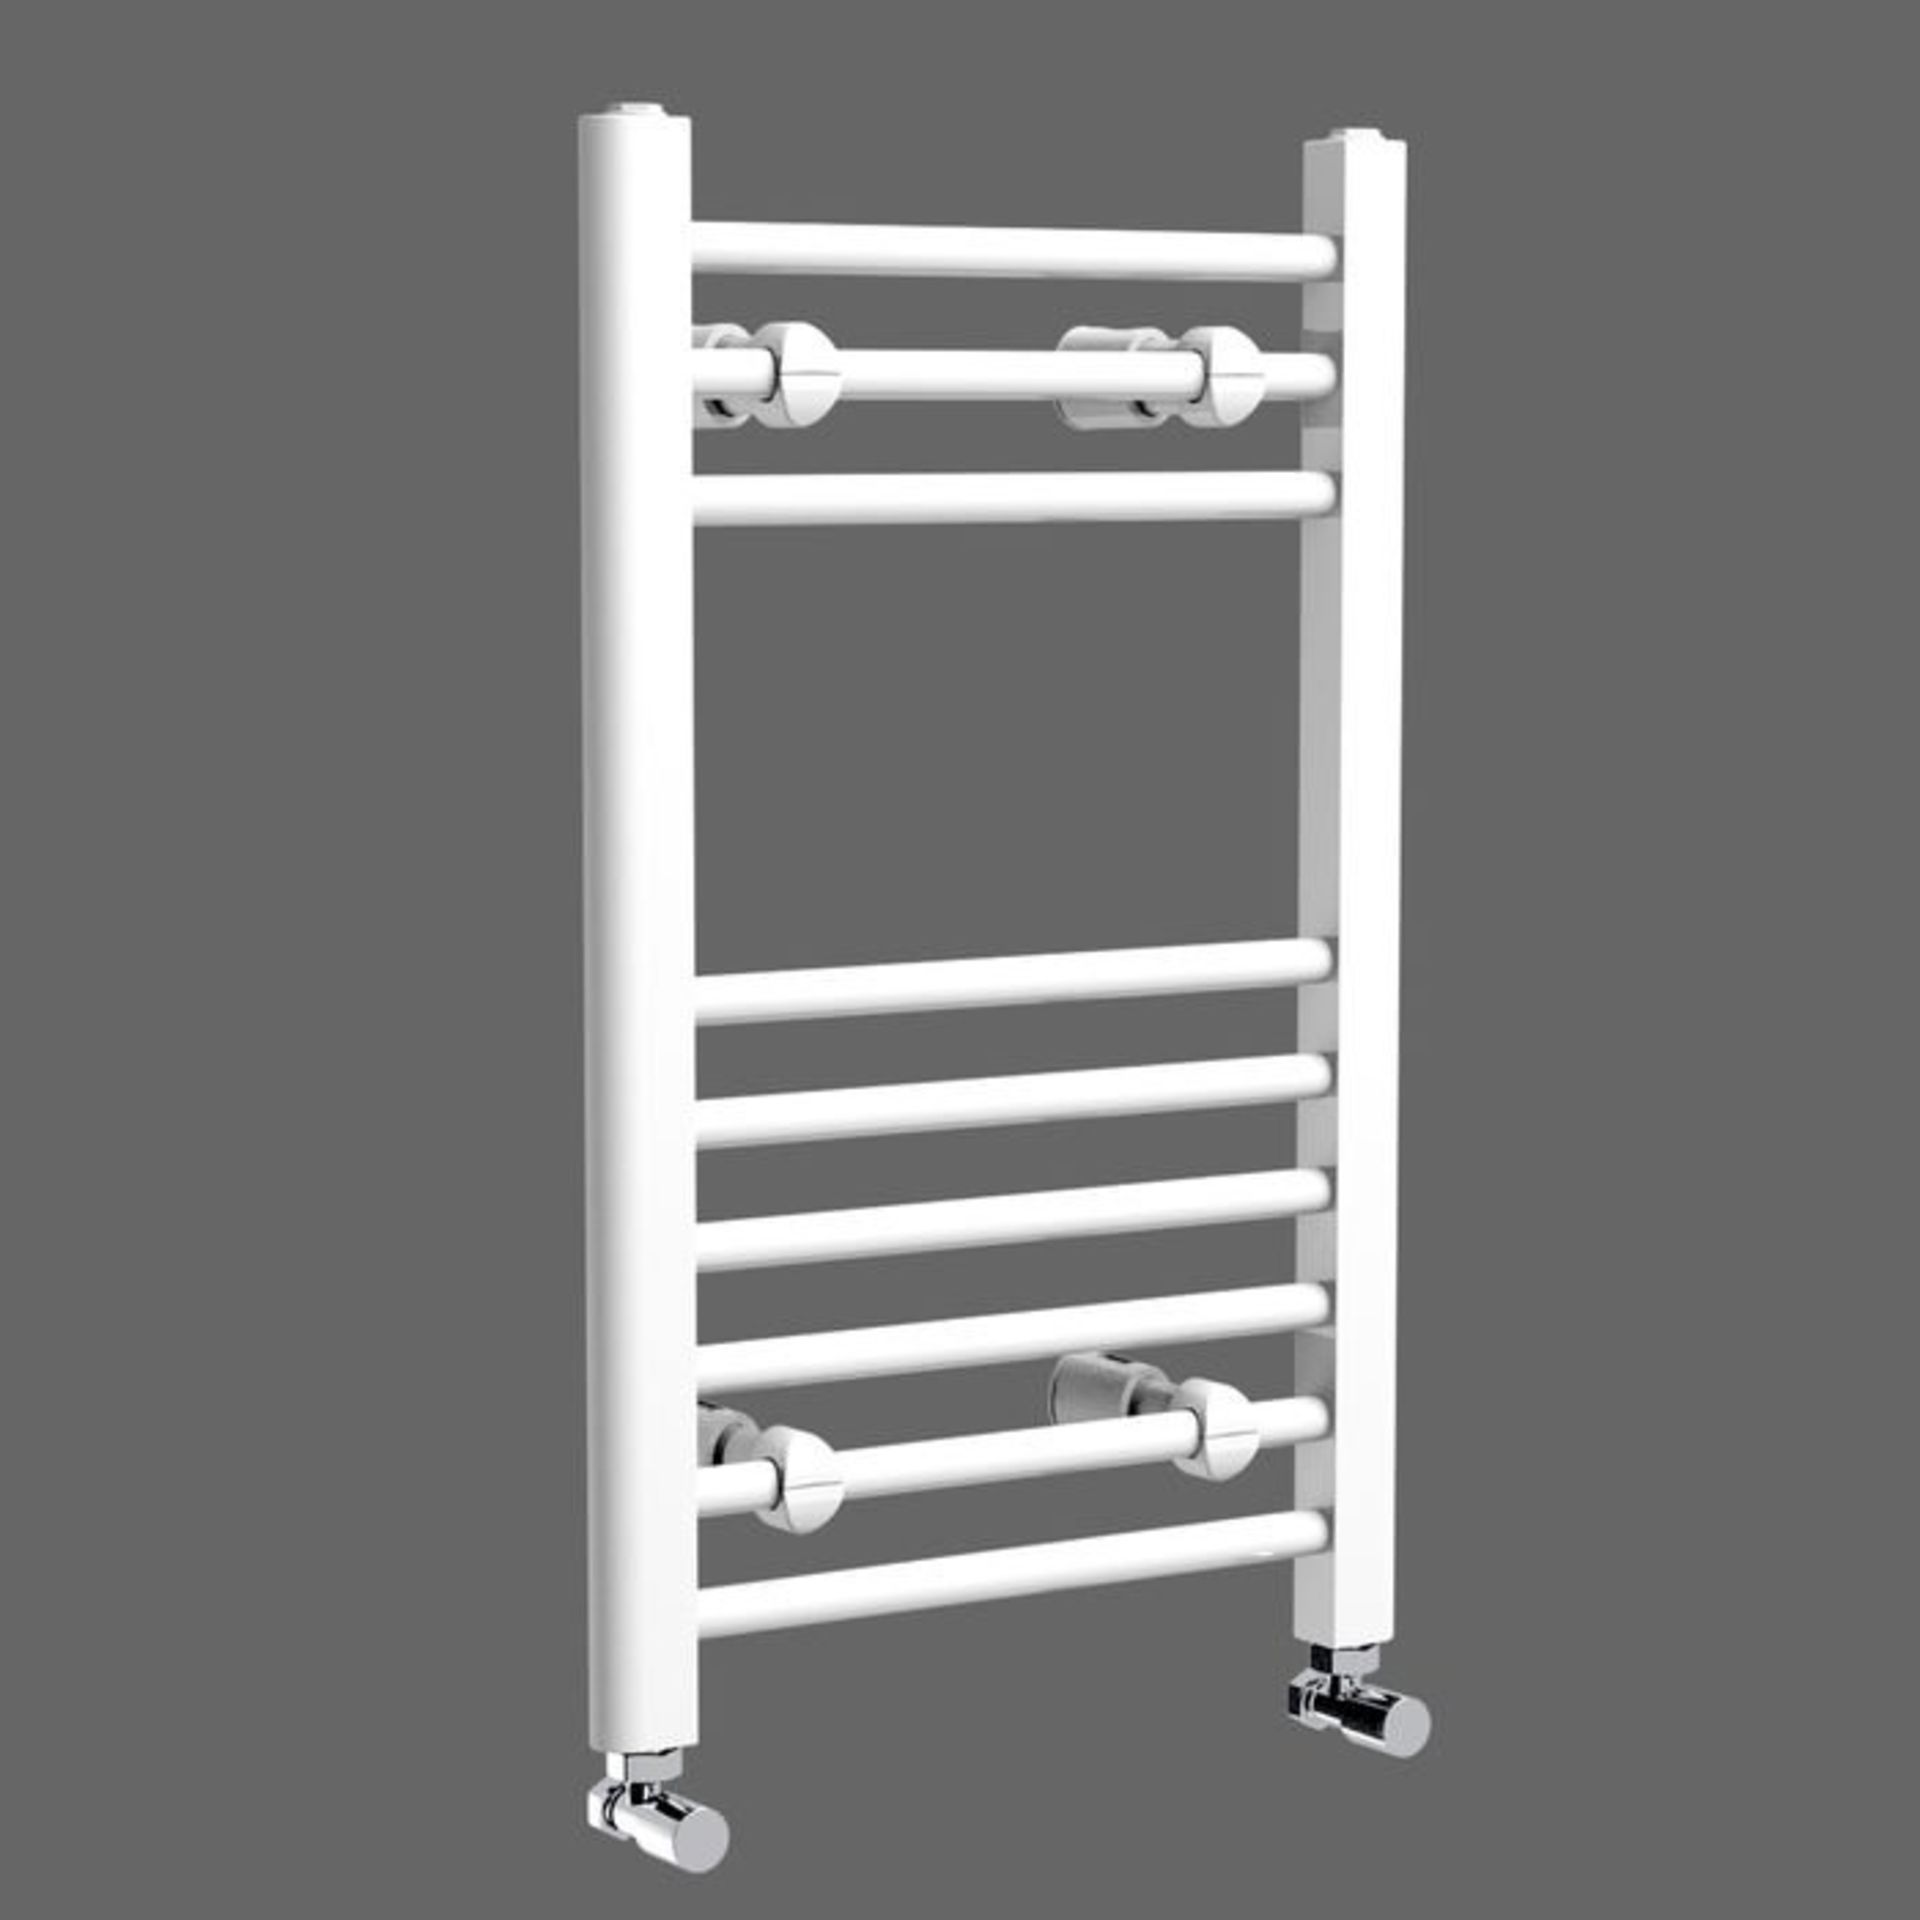 (G3) 650x400mm White Straight Rail Ladder Towel Radiator Low carbon steel, high quality white powder - Image 3 of 4